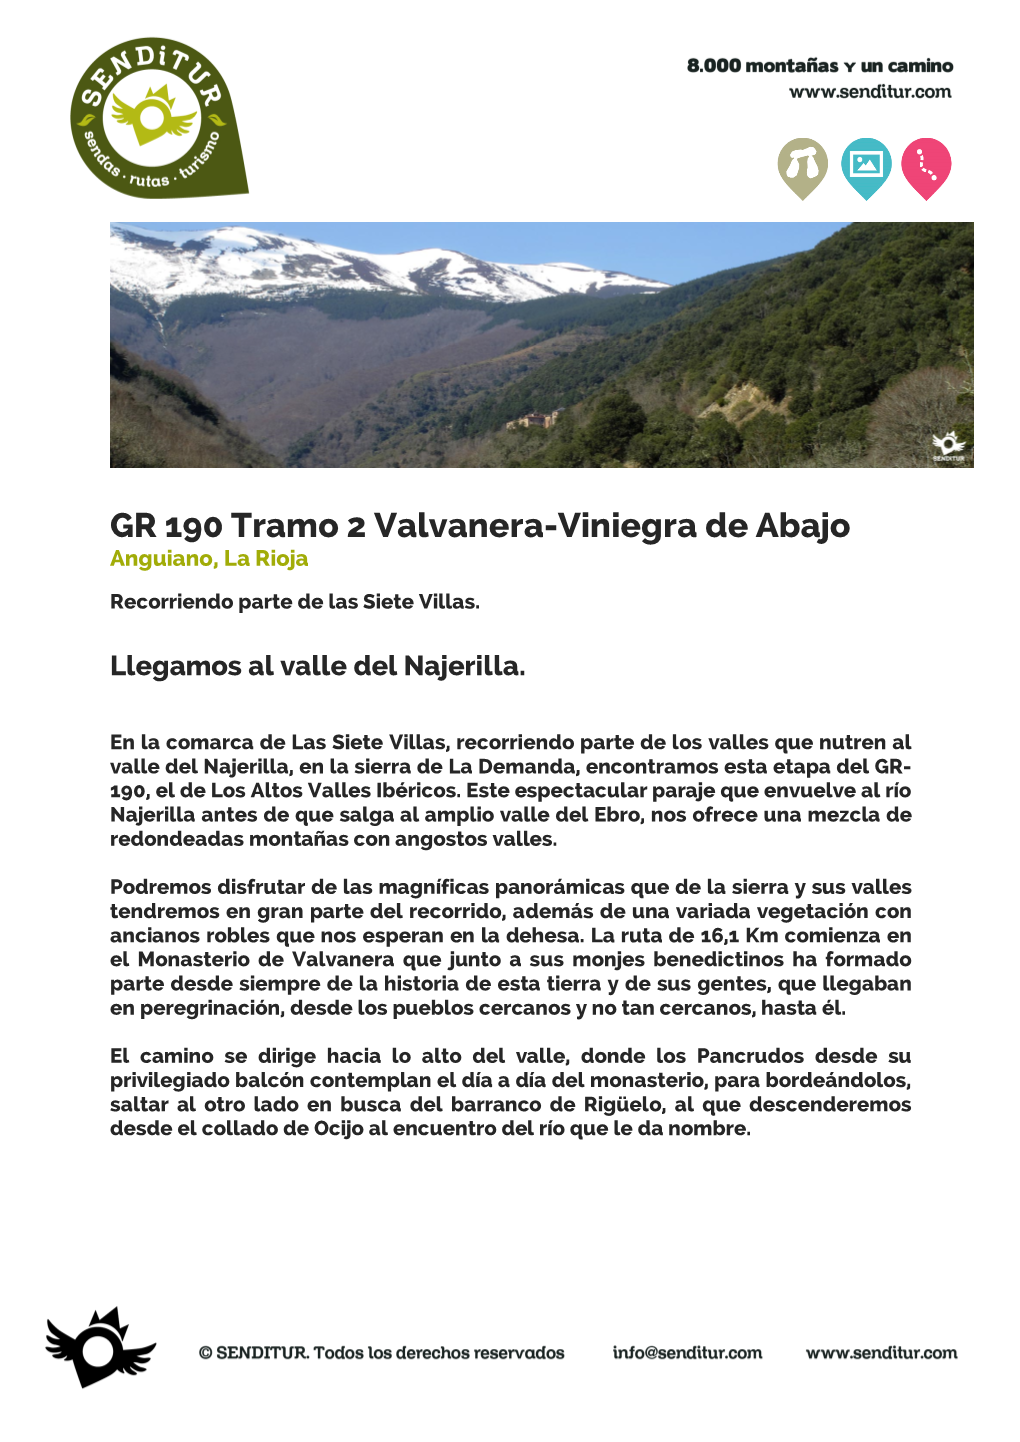 GR 190 Tramo 2 Valvanera-Viniegra De Abajo Anguiano, La Rioja